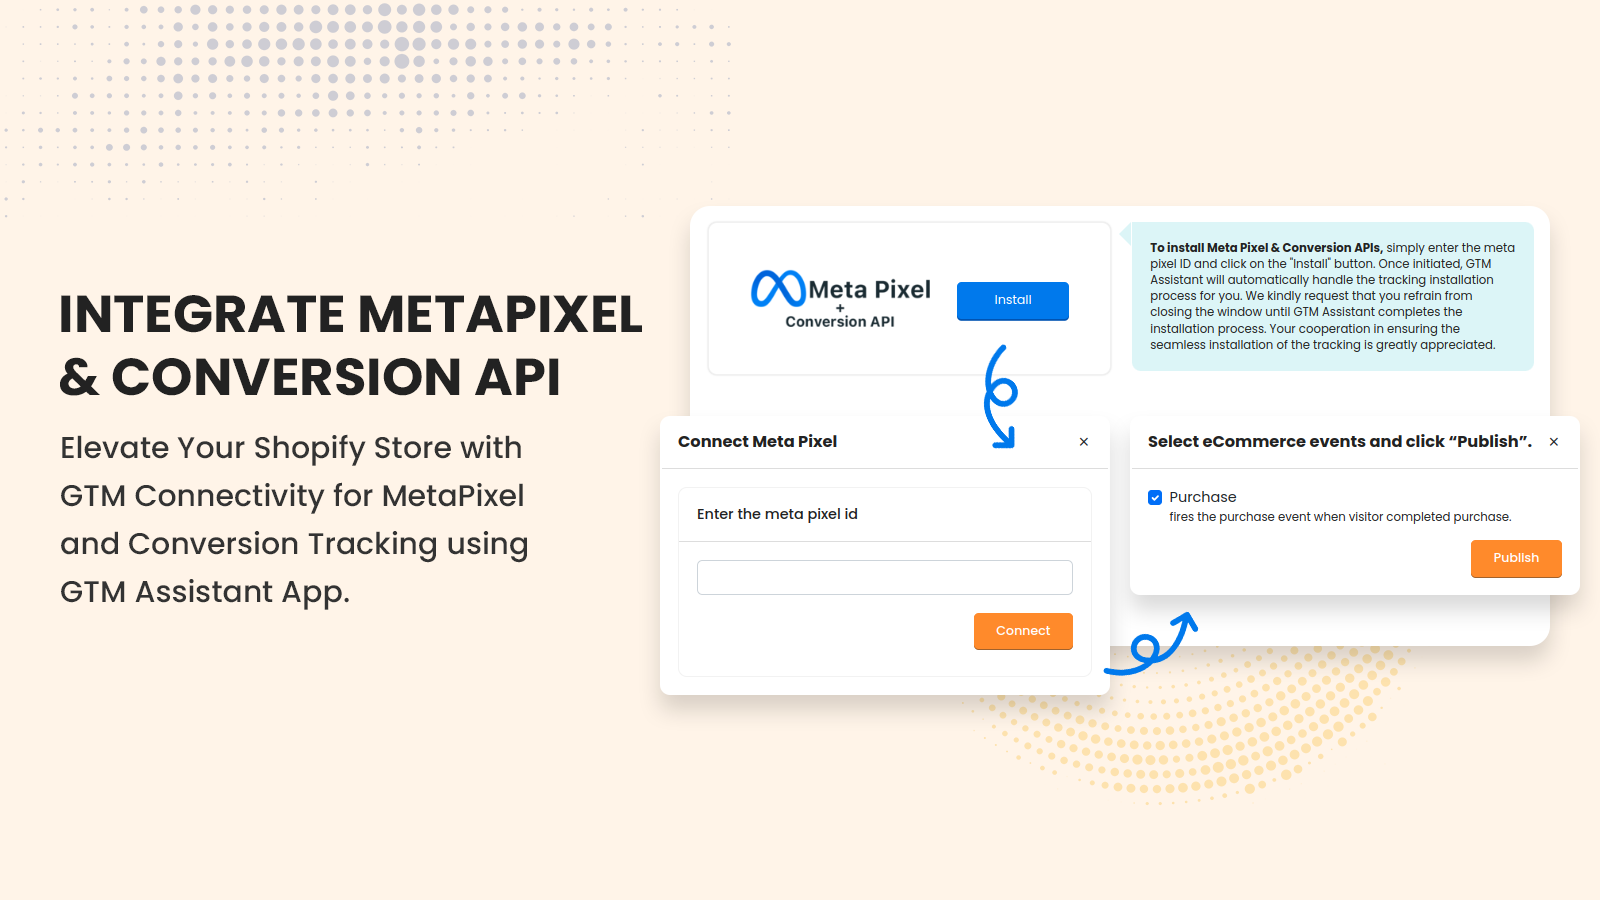 Install Meta Pixel, Conversion API, and Track ECommerce Events